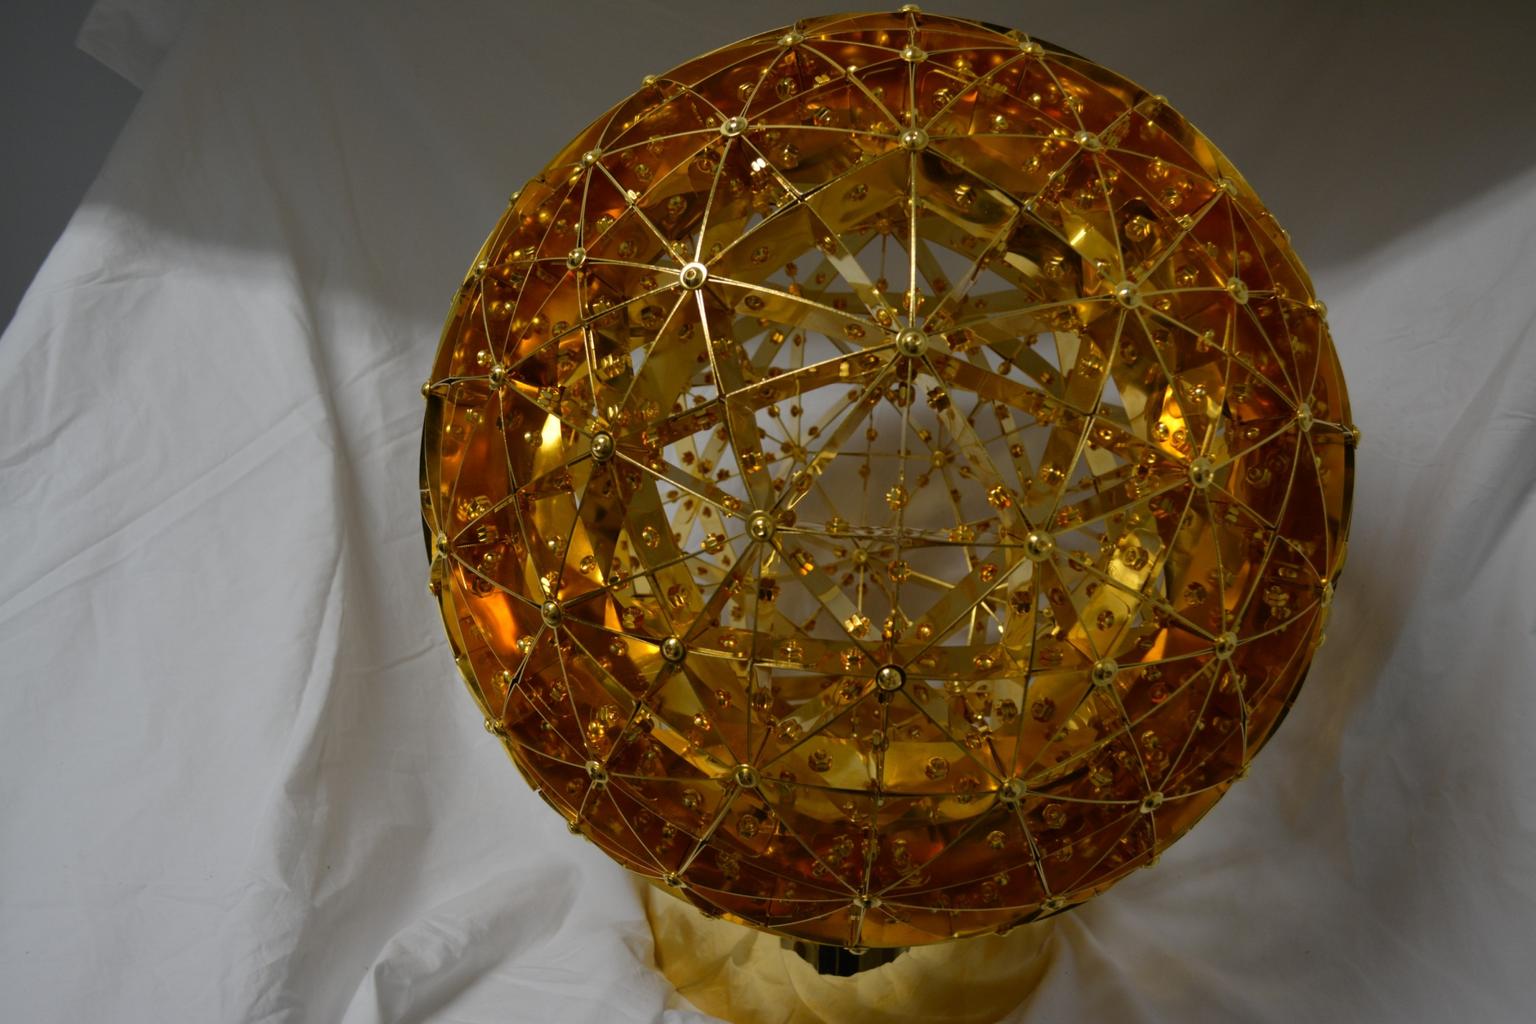 Image for entry 'Golden Sphere'